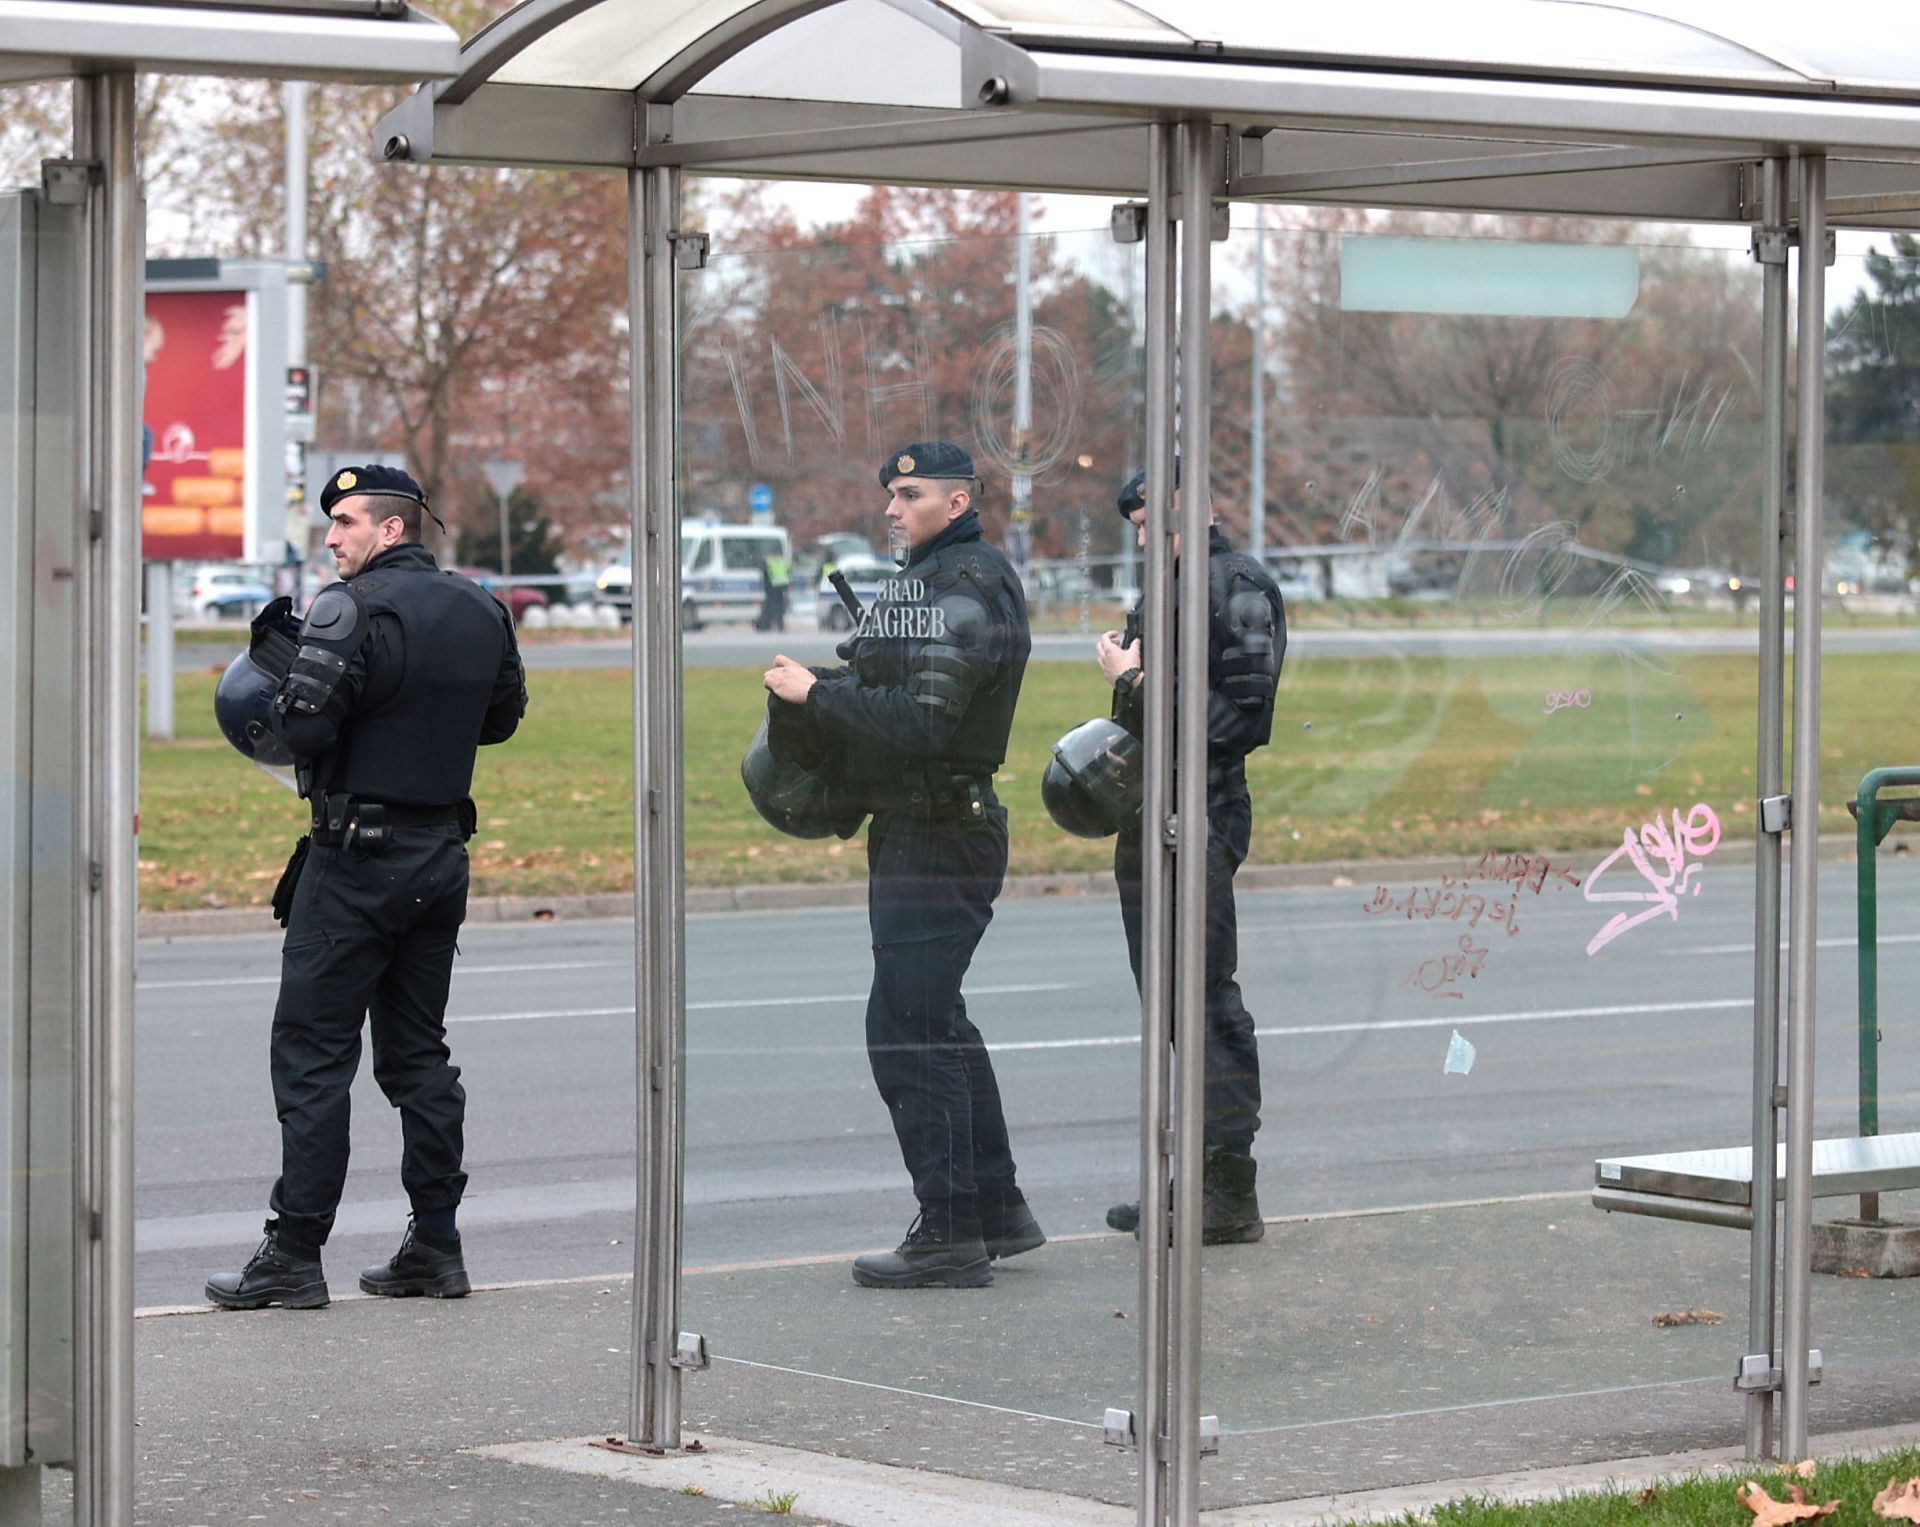 25.11.2015., Zagreb - Veci dio grada jutros je bio blokiran zbog prolaska kolone americkog potpredsjednika Bidena.
Photo: Patrik Macek/PIXSELL